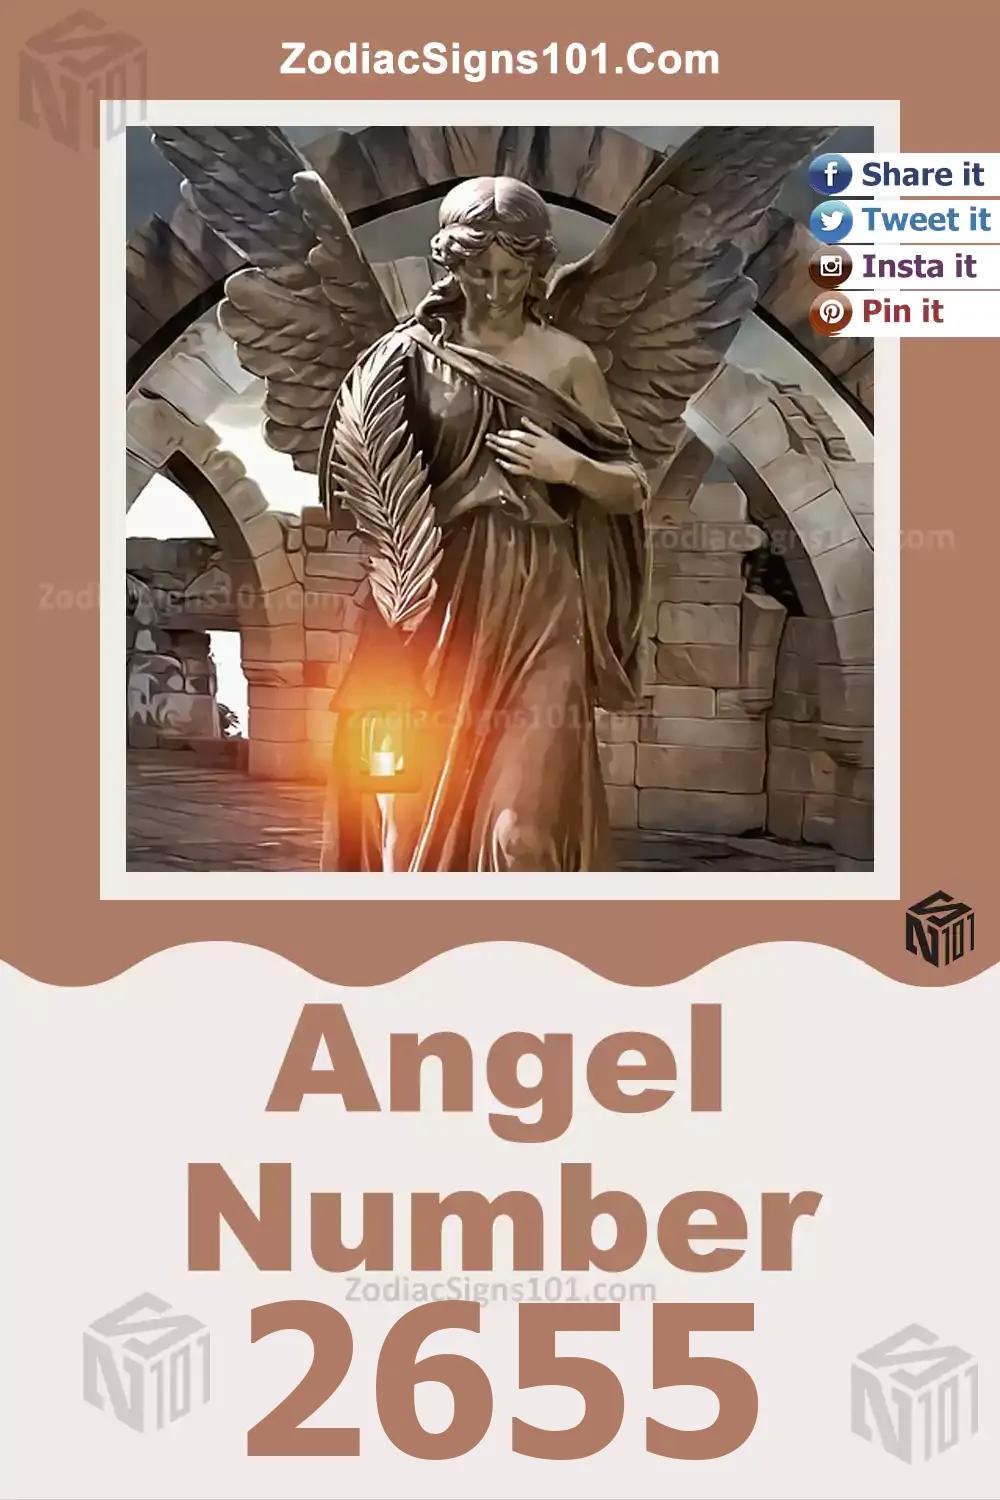 2655-Angel-Number-Meaning.jpg